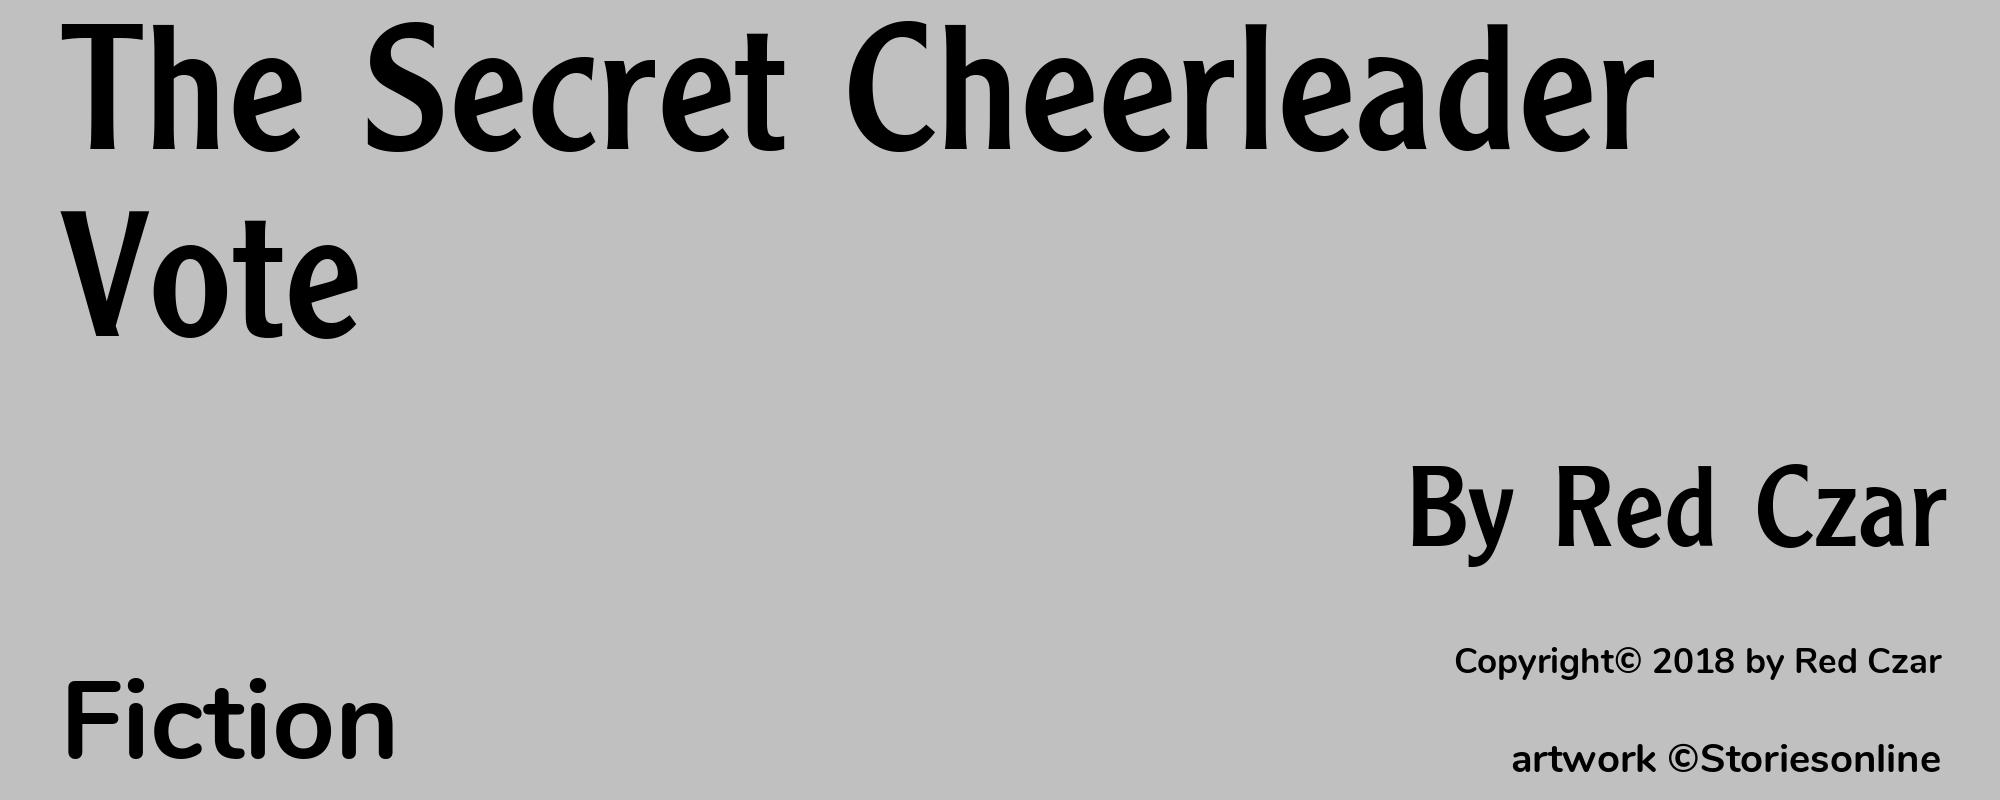 The Secret Cheerleader Vote - Cover